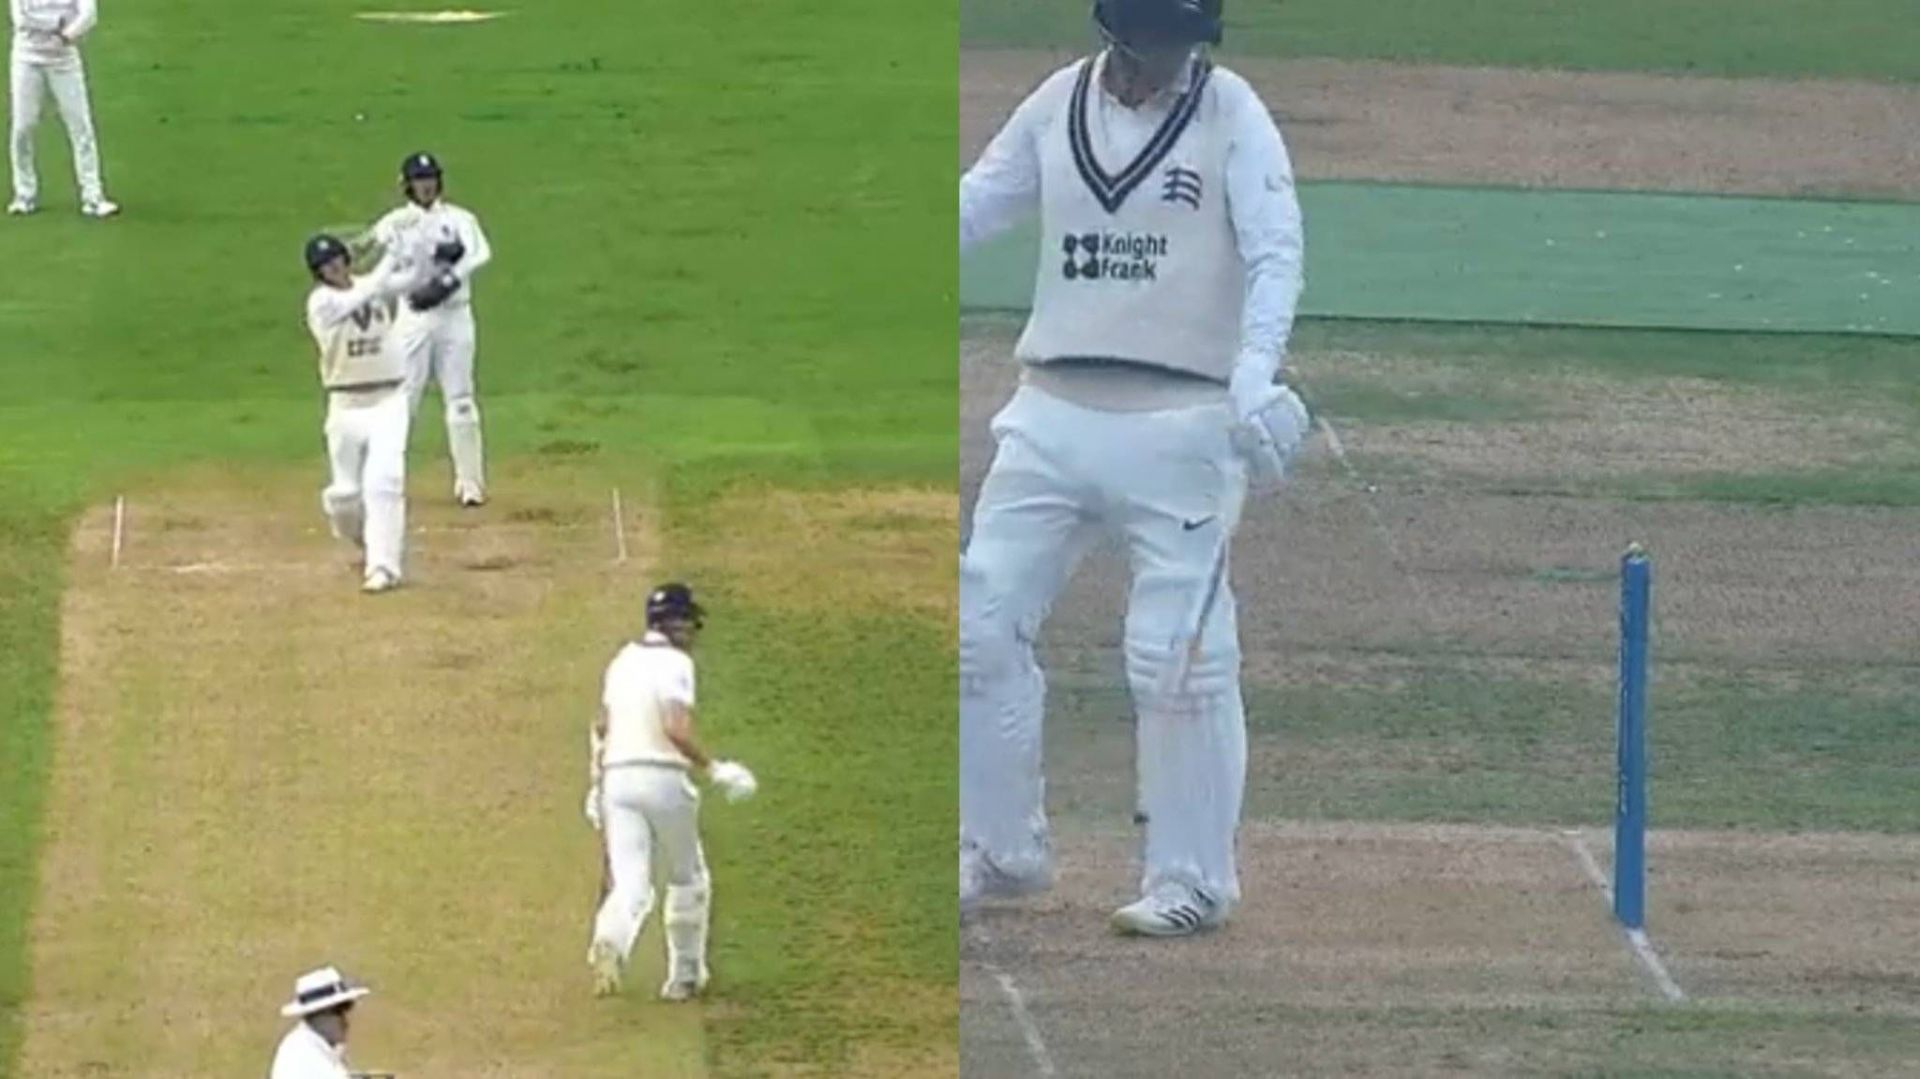 Toby Roland-Jones lost his wicket in a bizarre manner (Image: Twitter)